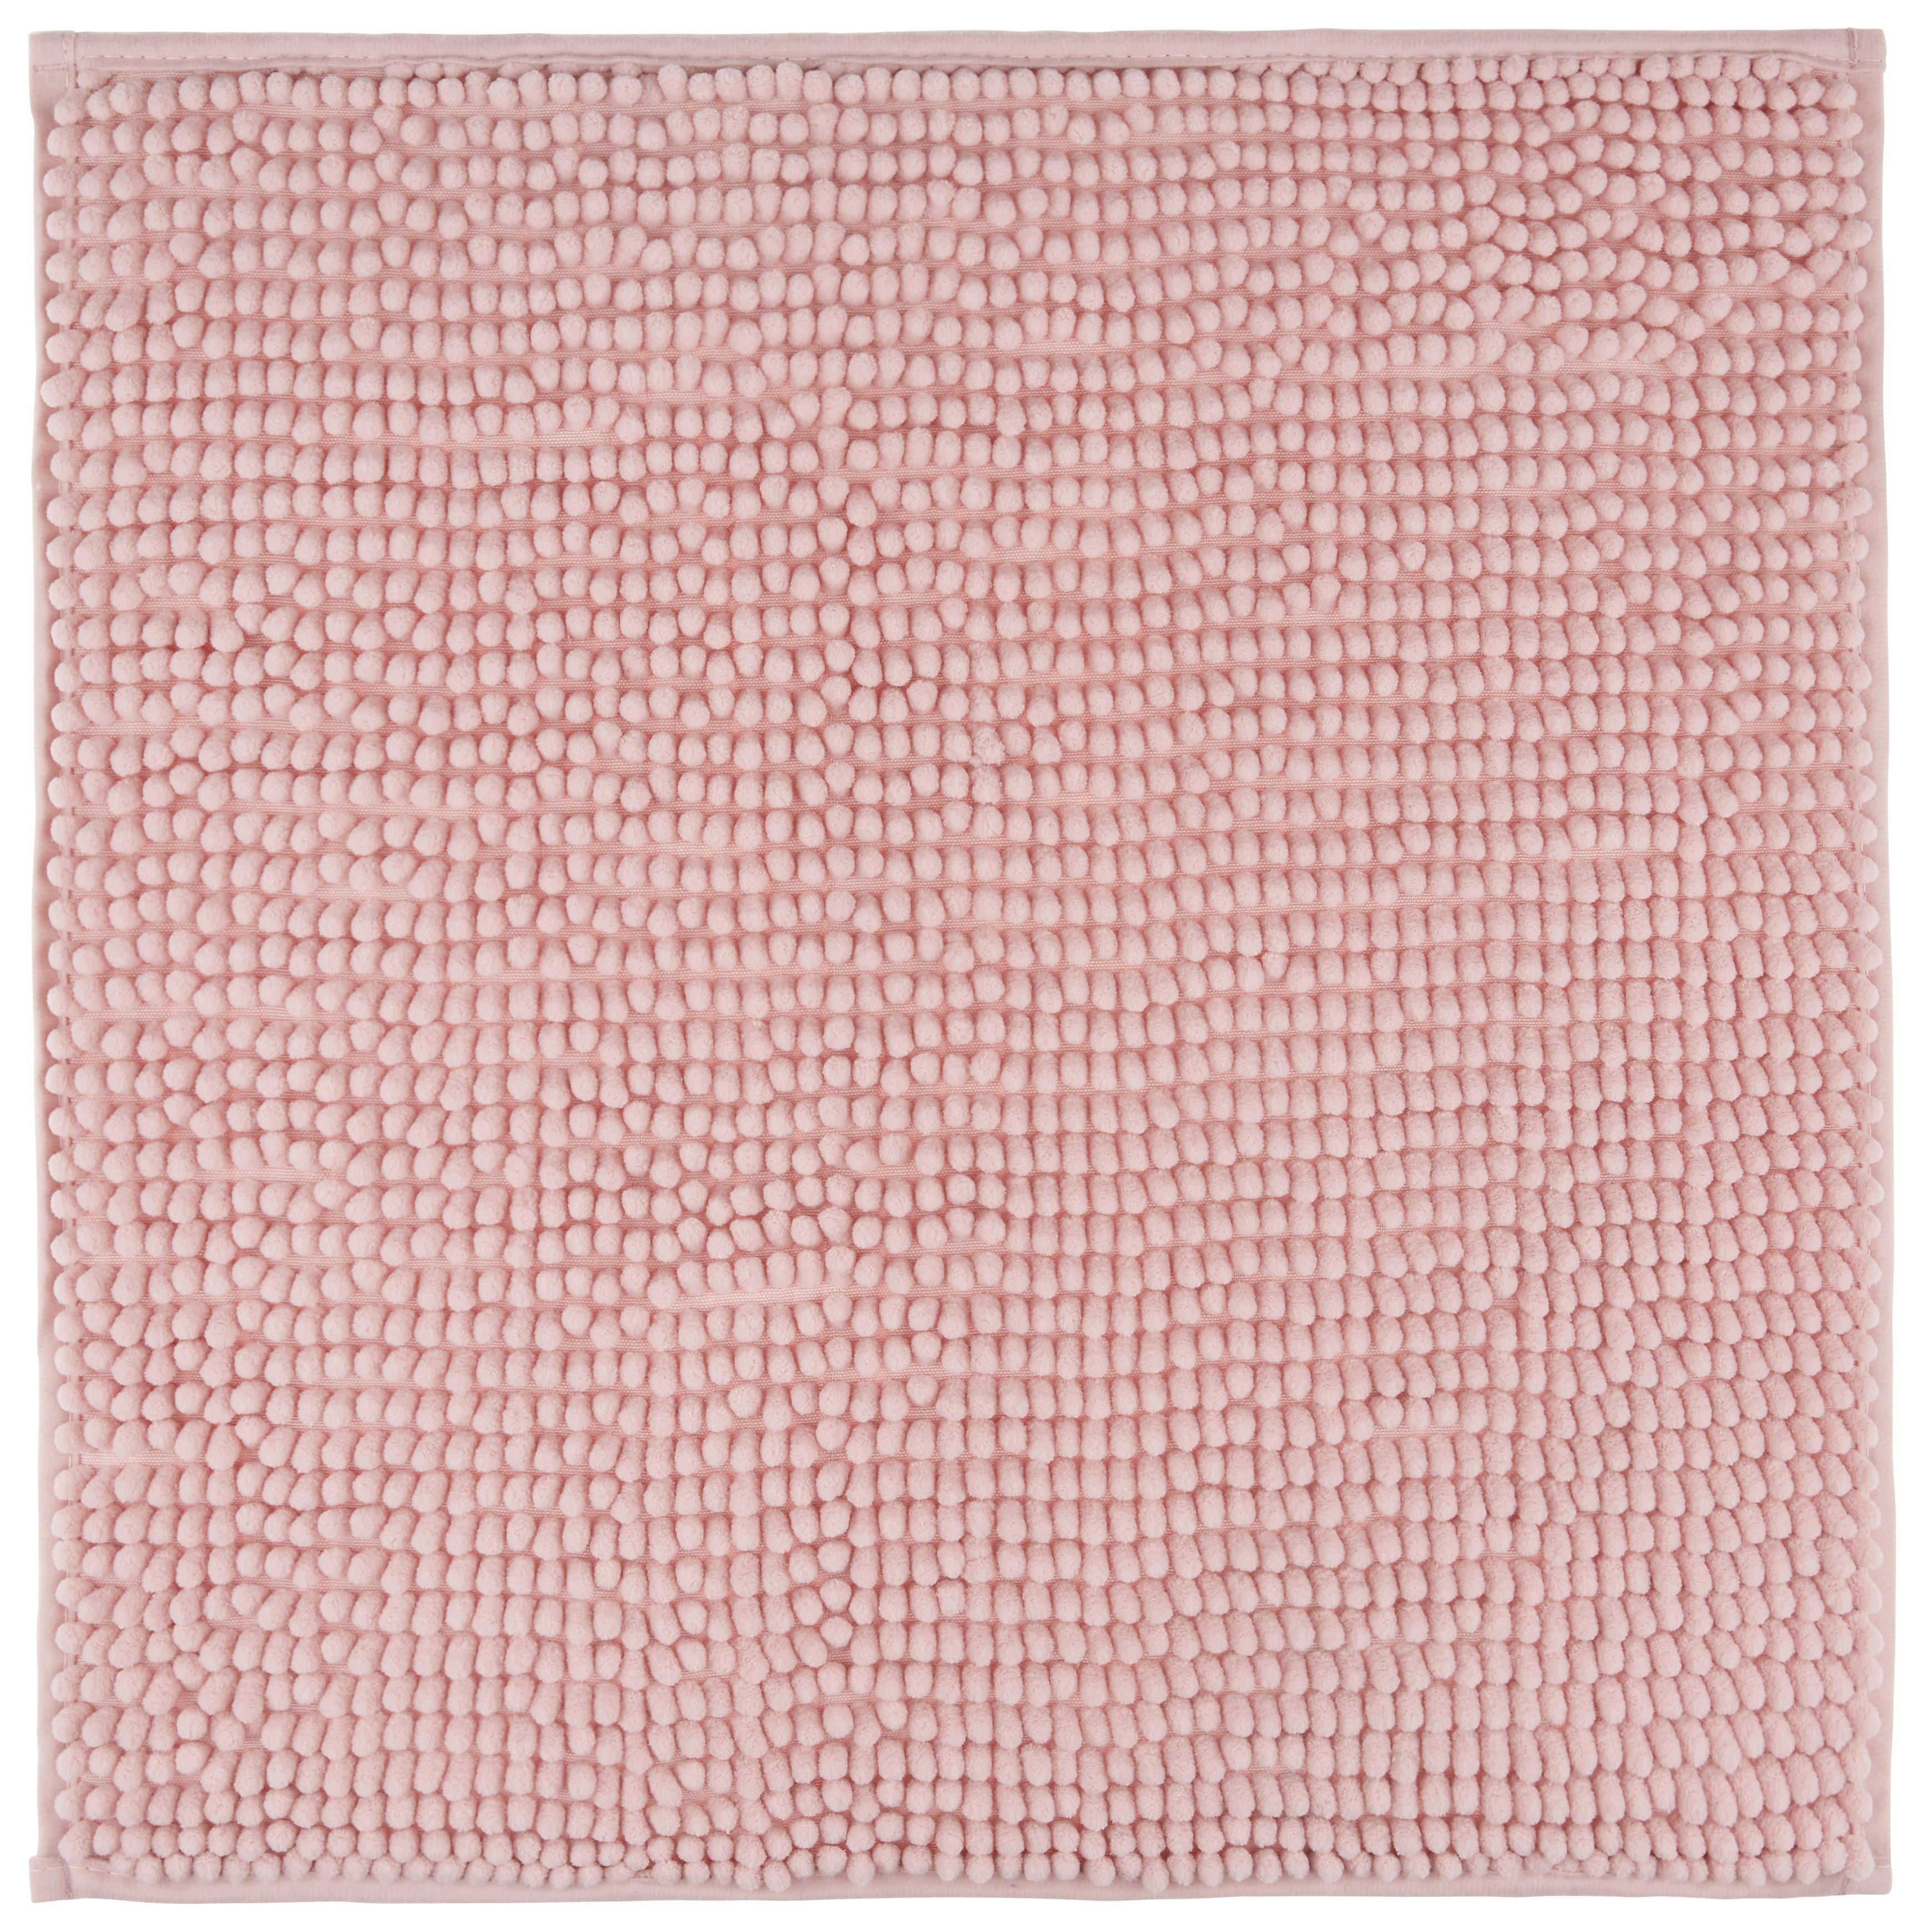 Badematte Nelly In Rosa Ca. 50x50cm - růžová, textil (50/50cm) - Modern Living